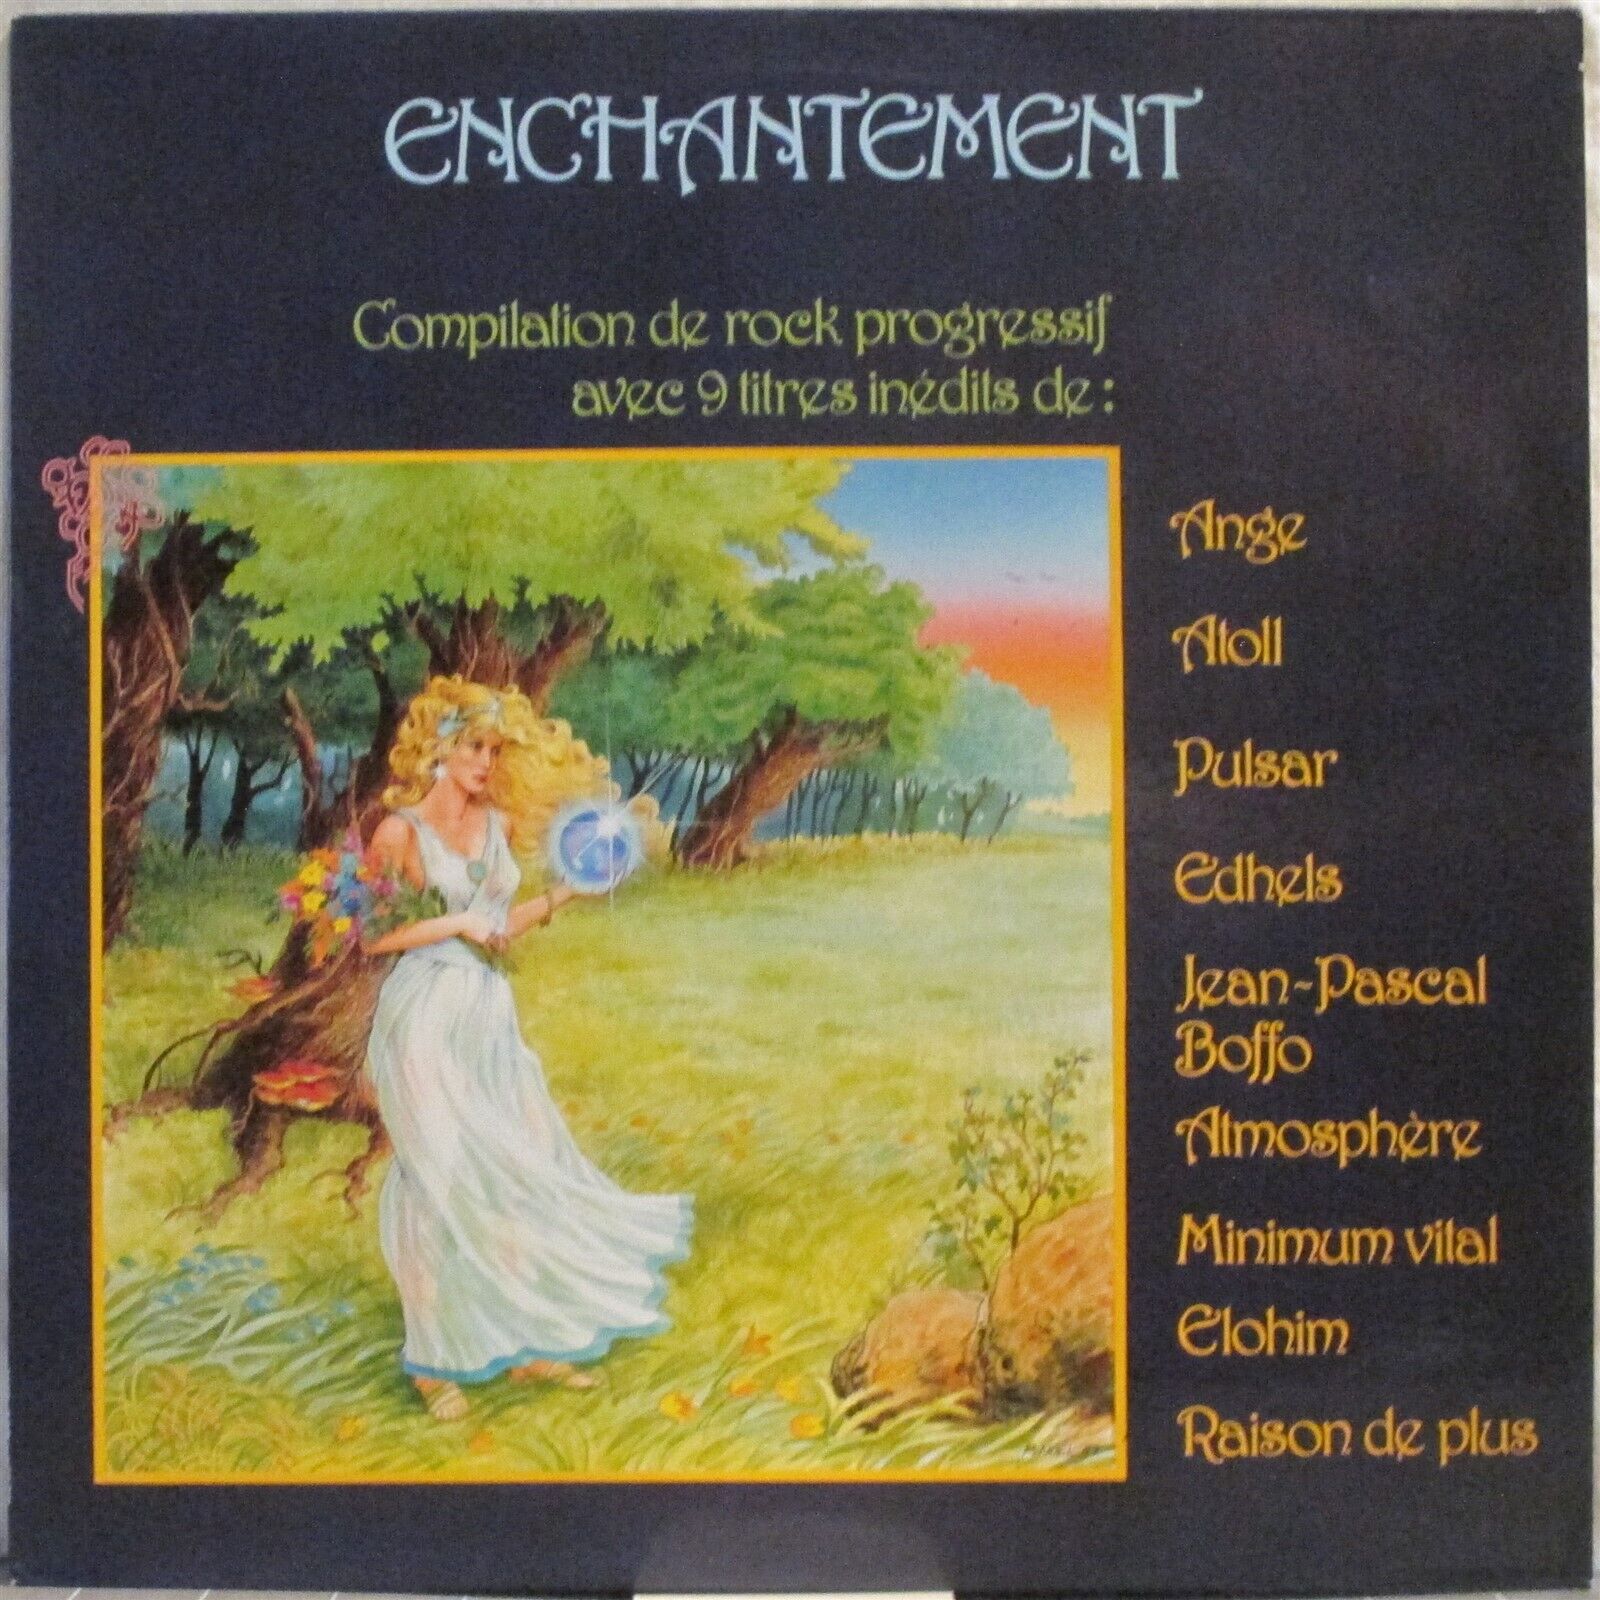 Enchantement: ANGE Edhels PULSAR Atoll JP BOFFO Minimum Vital…LP Unreleased Prog